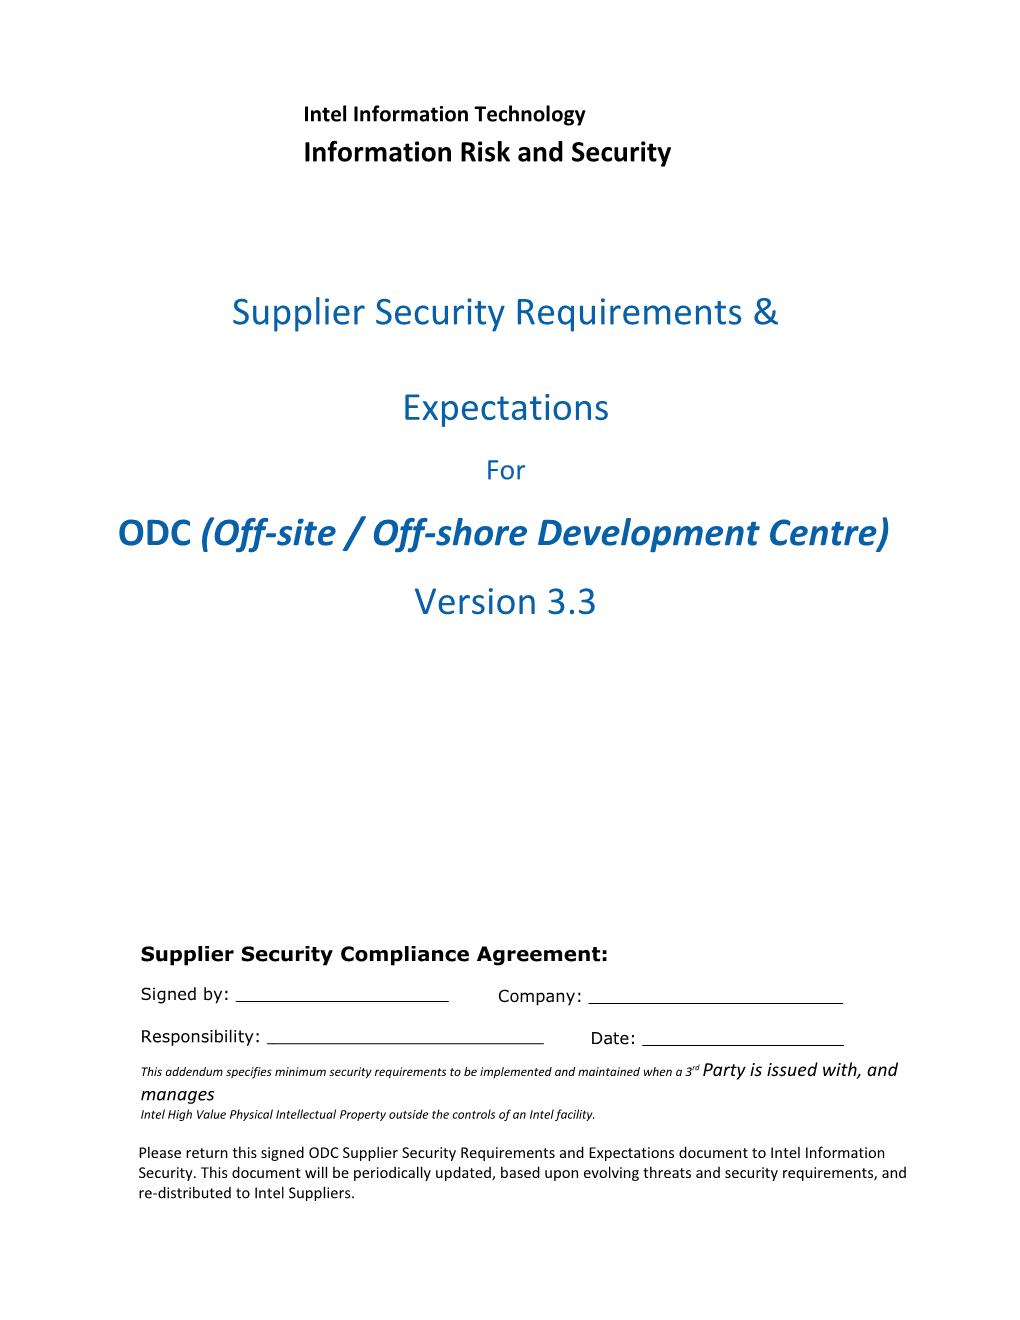 ODC(Off-Site/Off-Shoredevelopmentcentre)